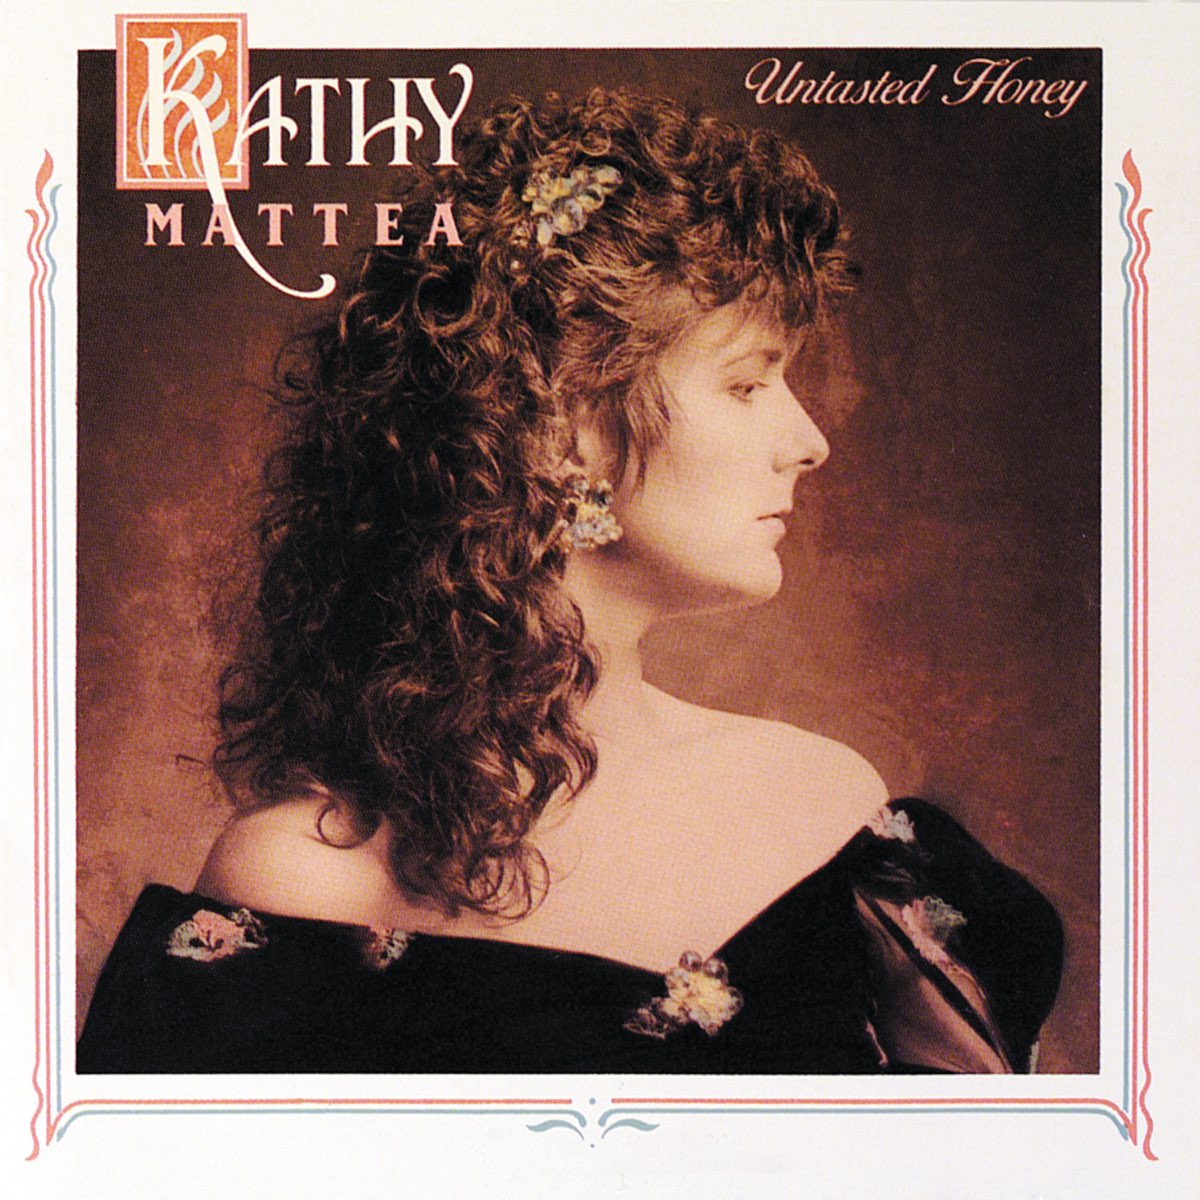 Kathy Mattea 的 专 辑(Untasted Honey) .